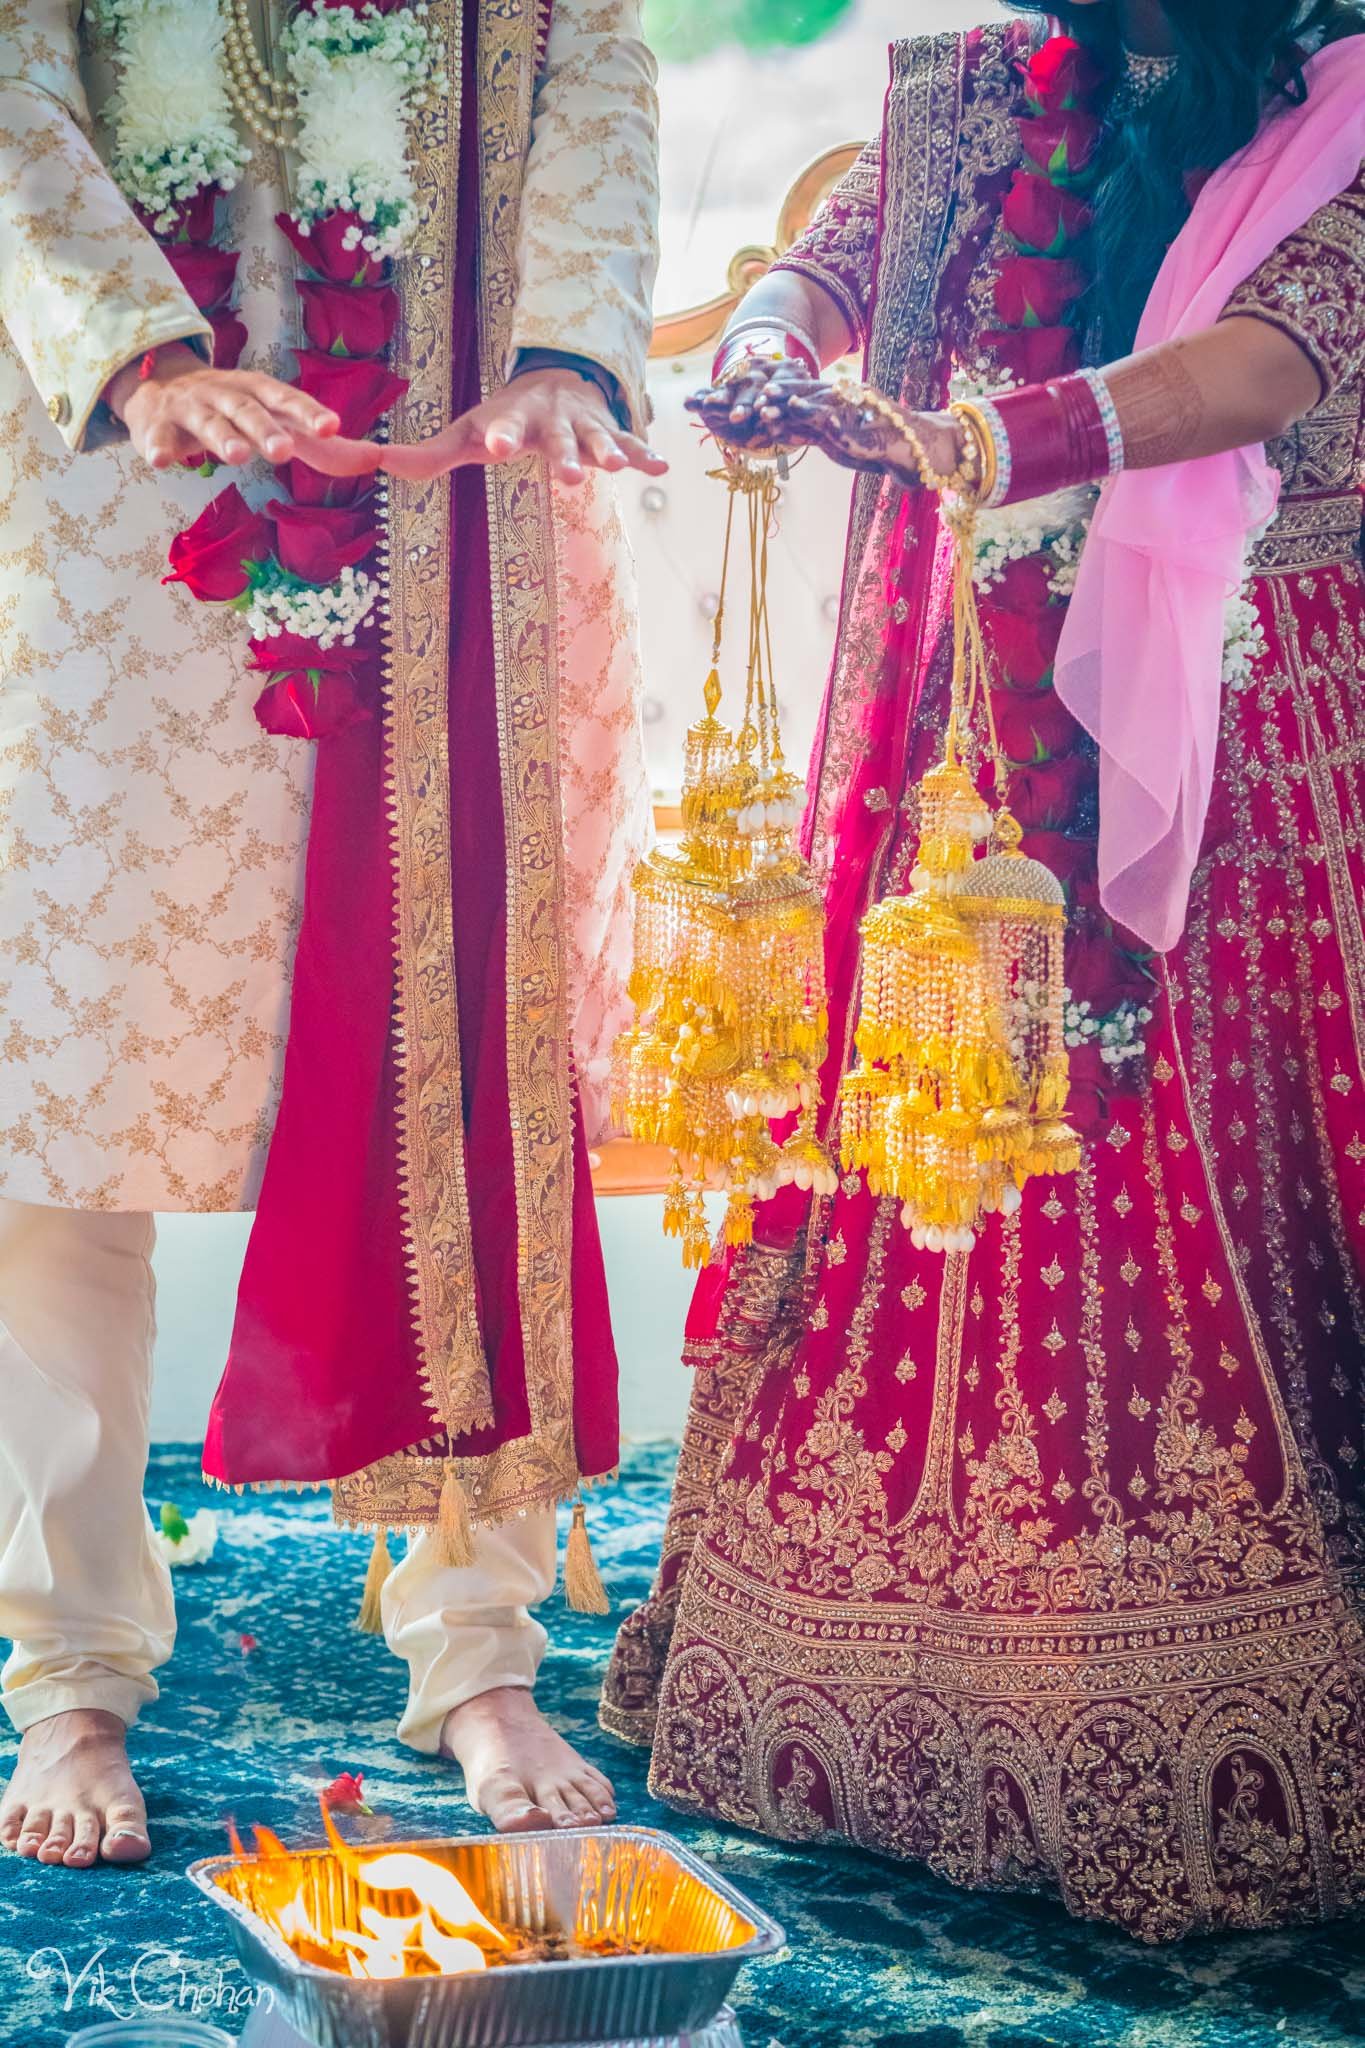 2022-06-09-Annie-&-Steven-Las-Vegas-Indian-Wedding-Ceremony-Photography-Vik-Chohan-Photography-Photo-Booth-Social-Media-VCP-168.jpg